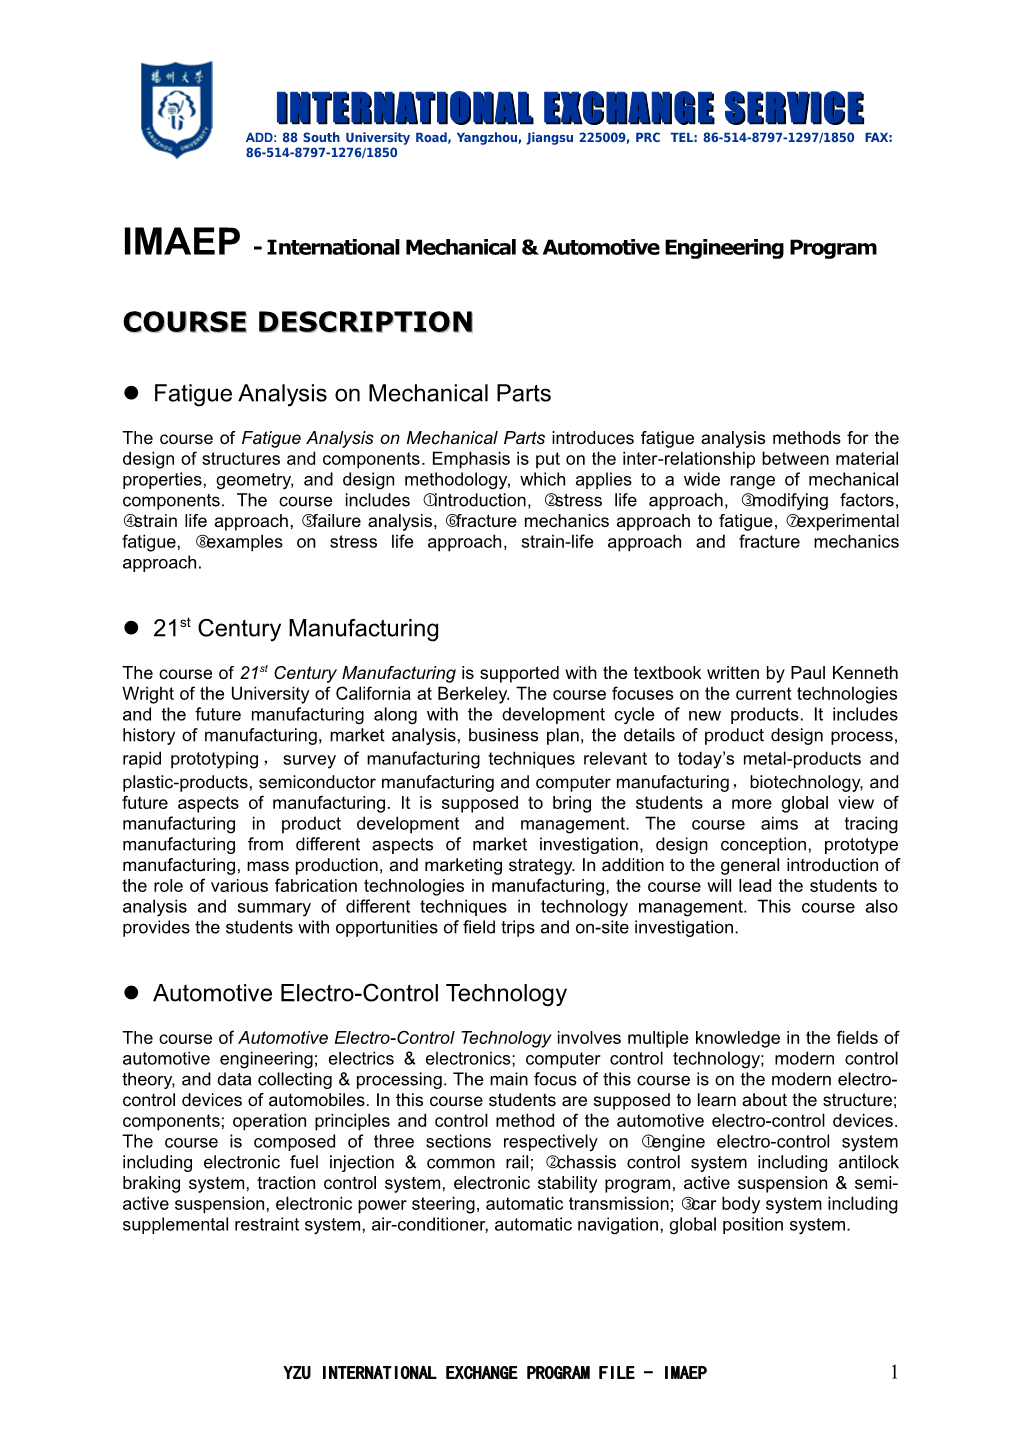 IMAEP - International Mechanical & Automotive Engineering Program